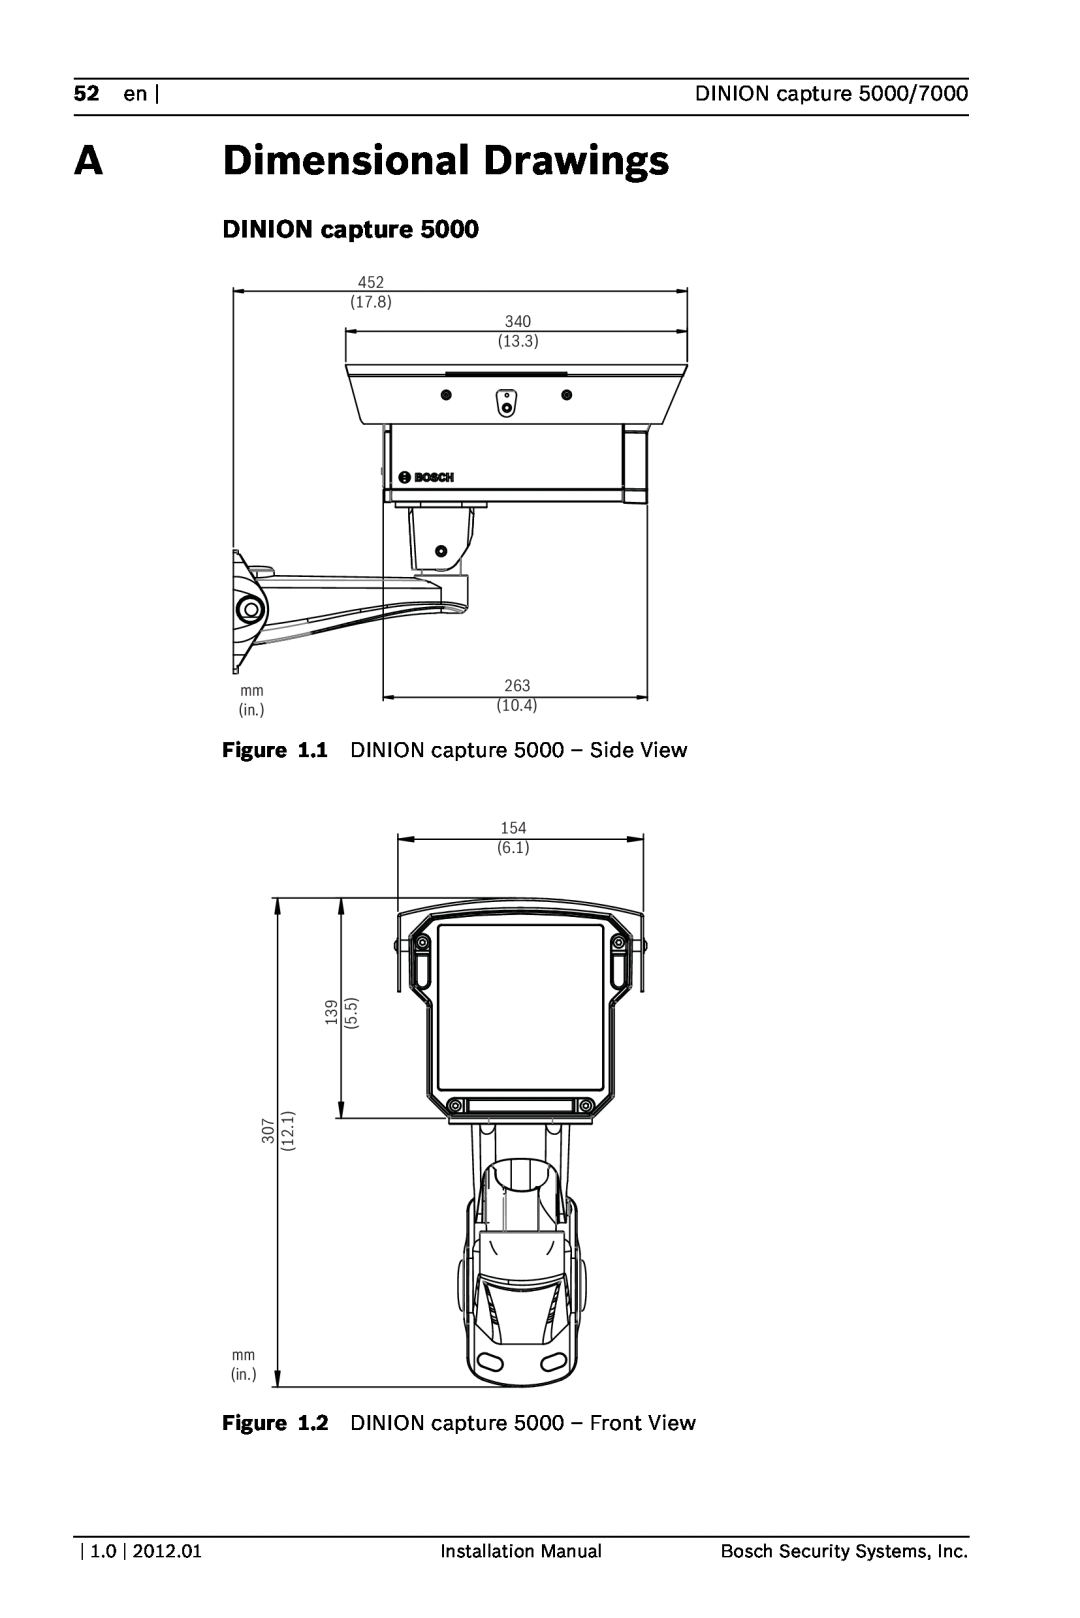 Bosch Appliances ADimensional Drawings, 52 en, DINION capture 5000/7000, DINION capture 5000 – Side View, 1.0 